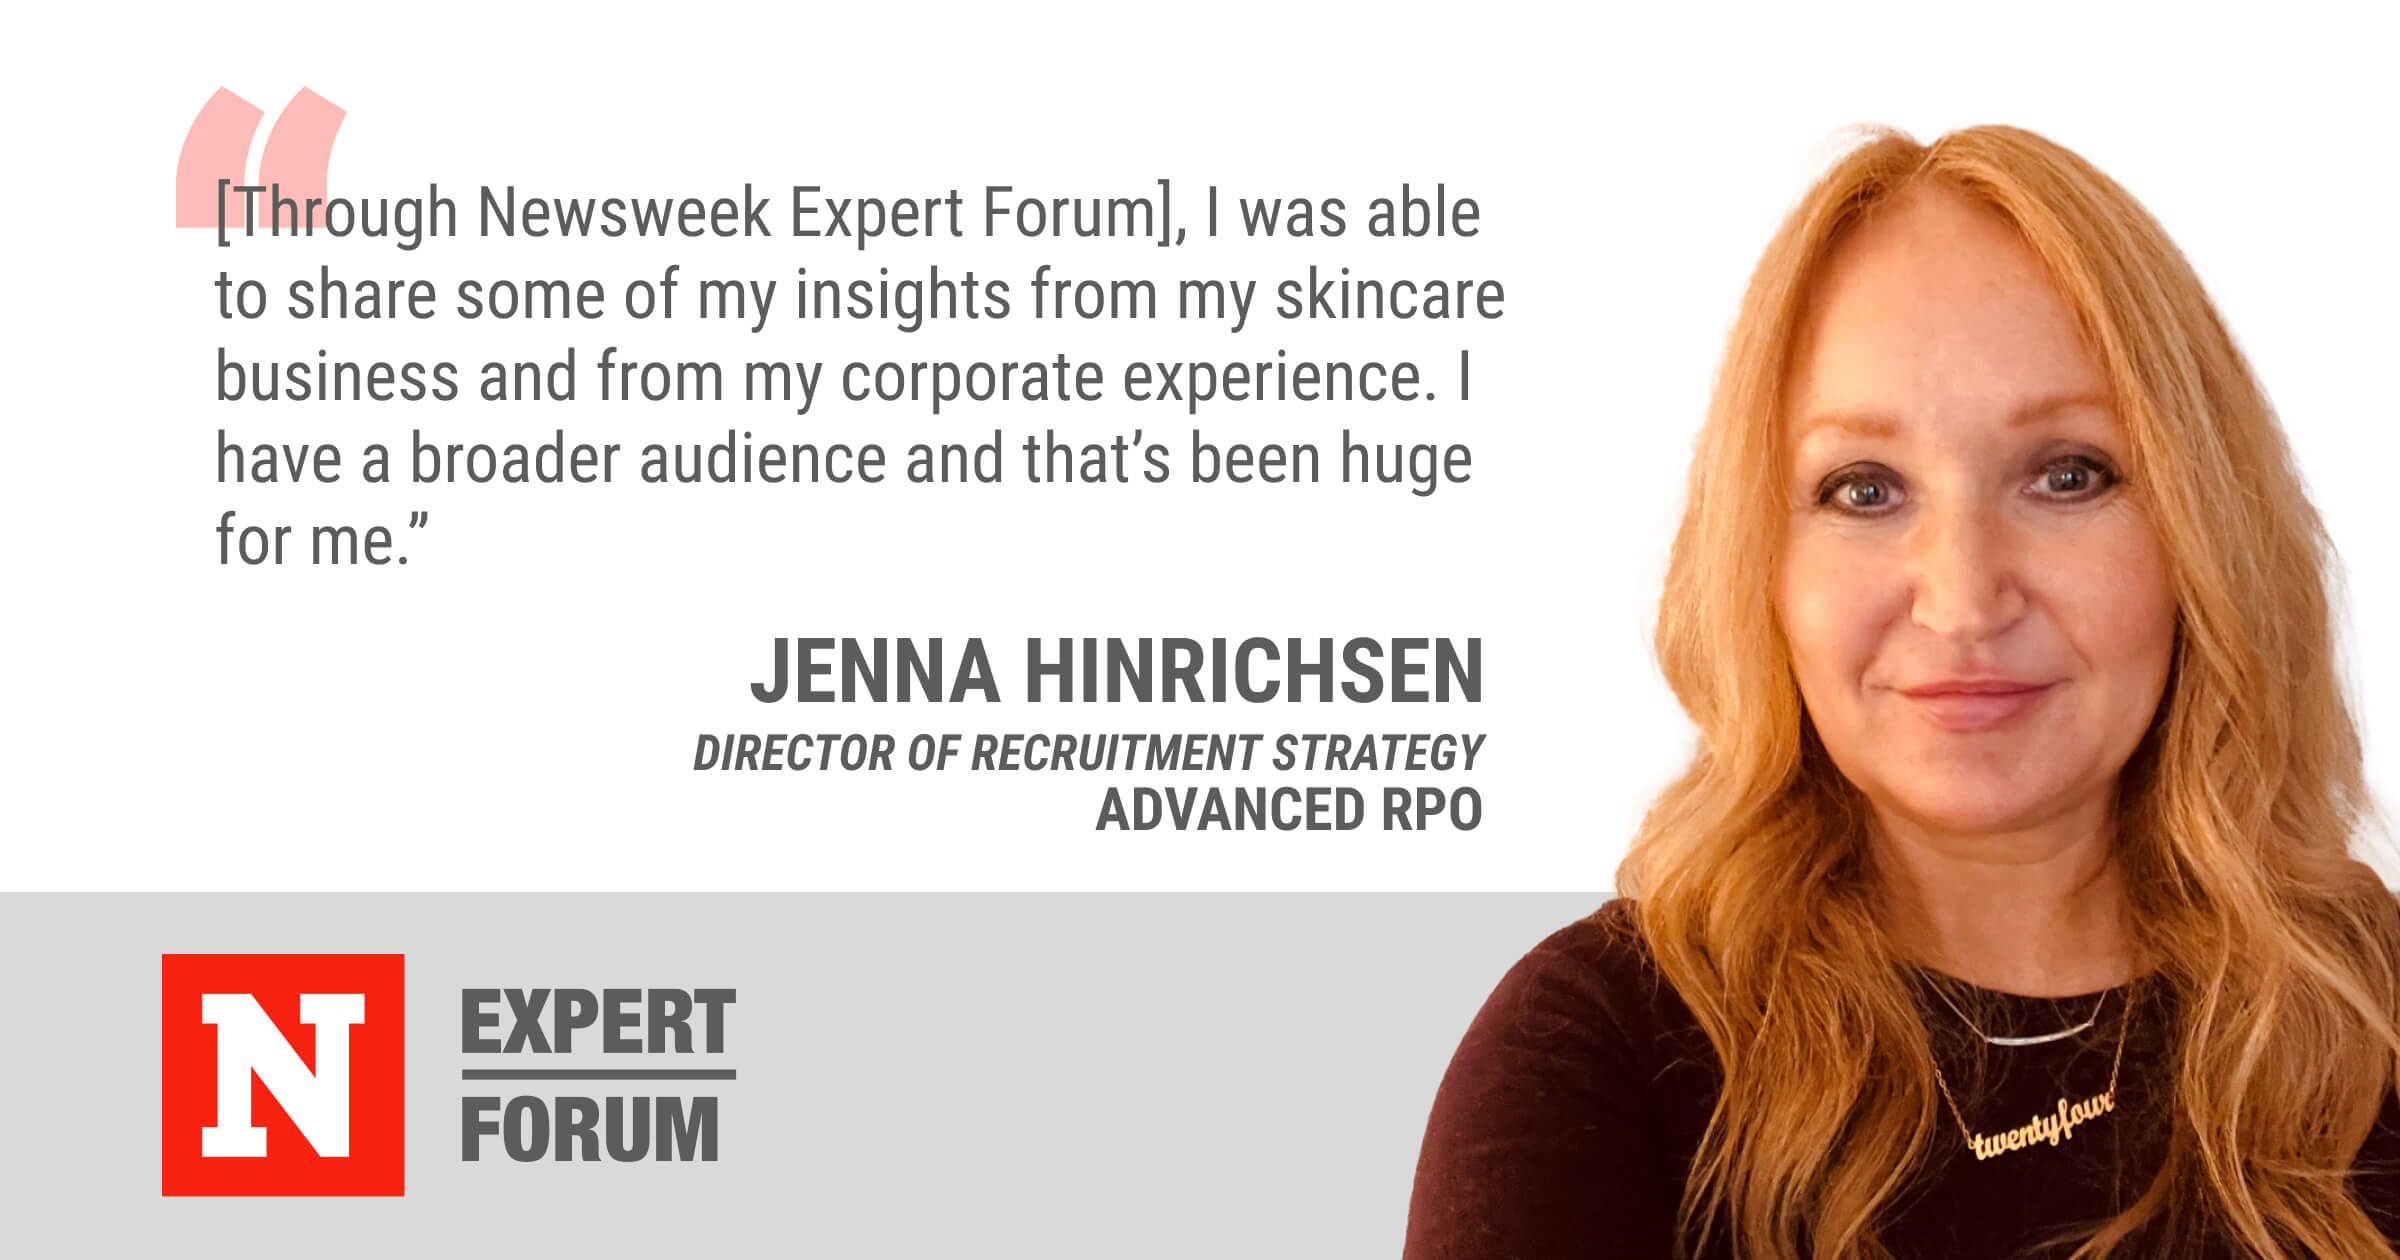 Newsweek Expert Forum Gives Jenna Hinrichsen a Broader Audience For Content